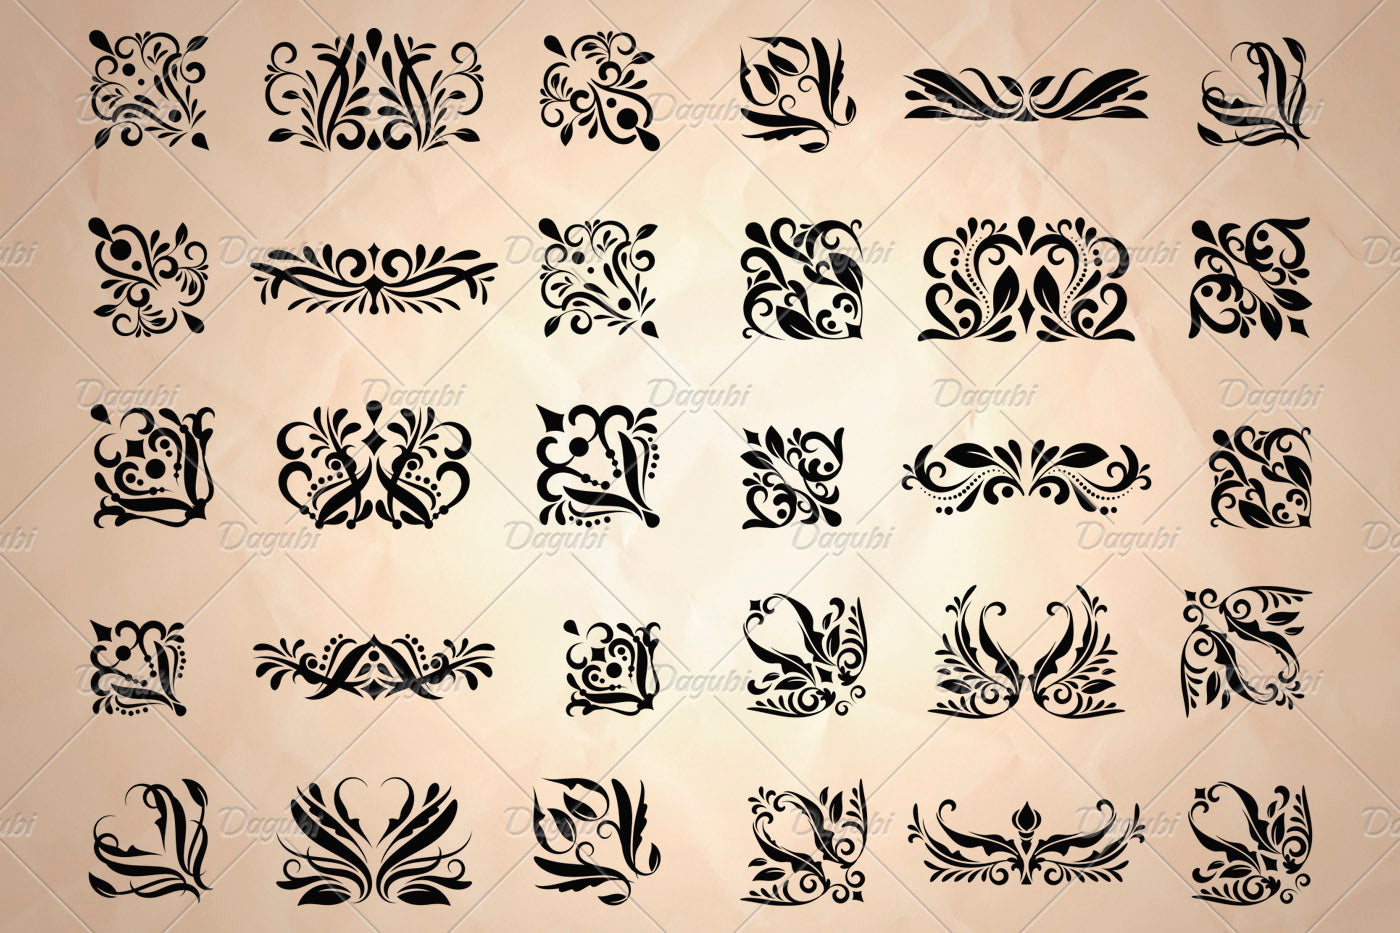 Calligraphic Pattern Brushes for Adobe Illustrator